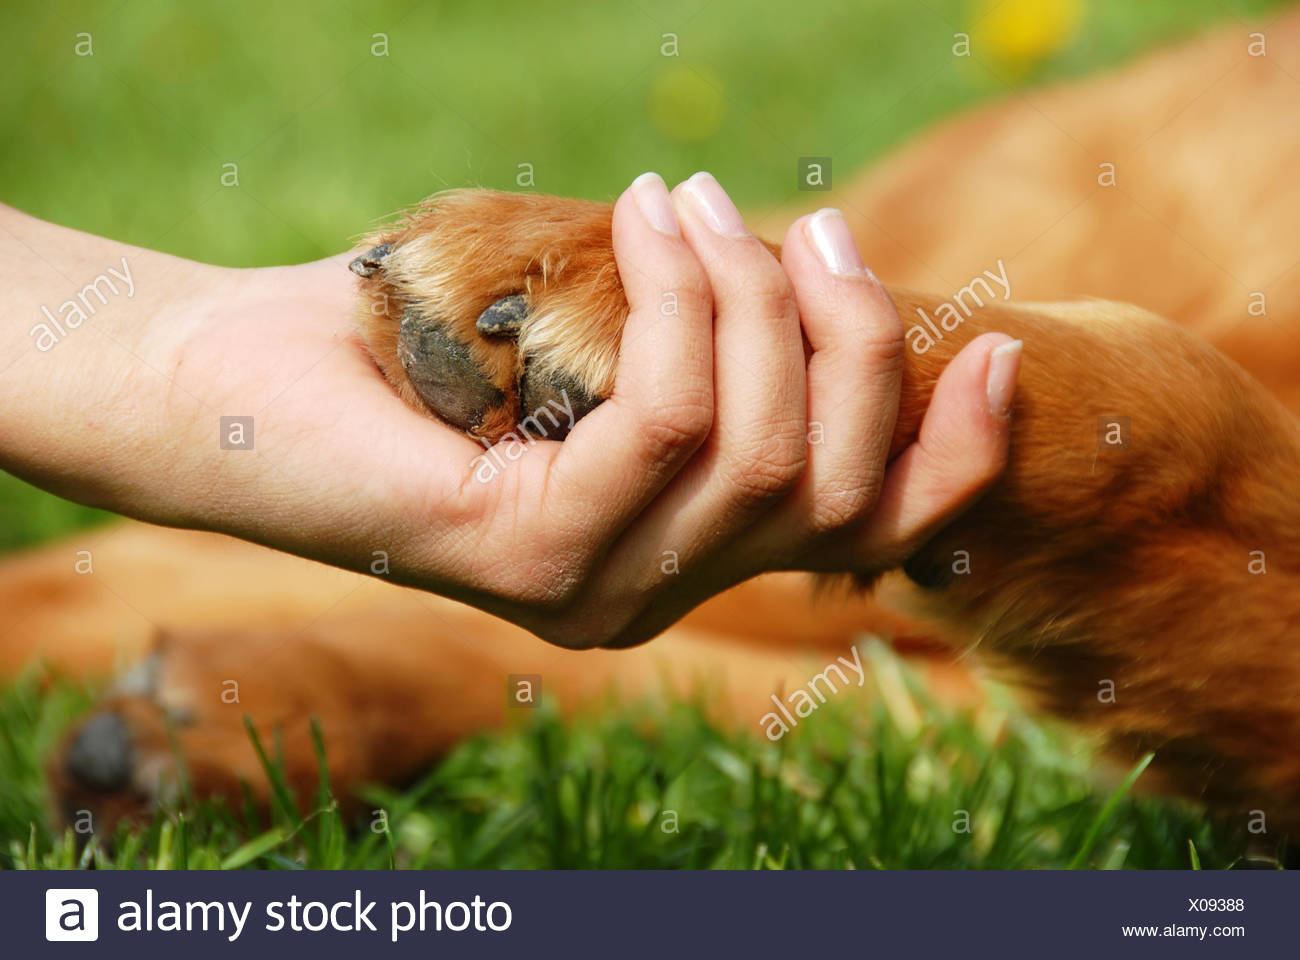 Dog paw and hand shaking Stock Photo - Alamy